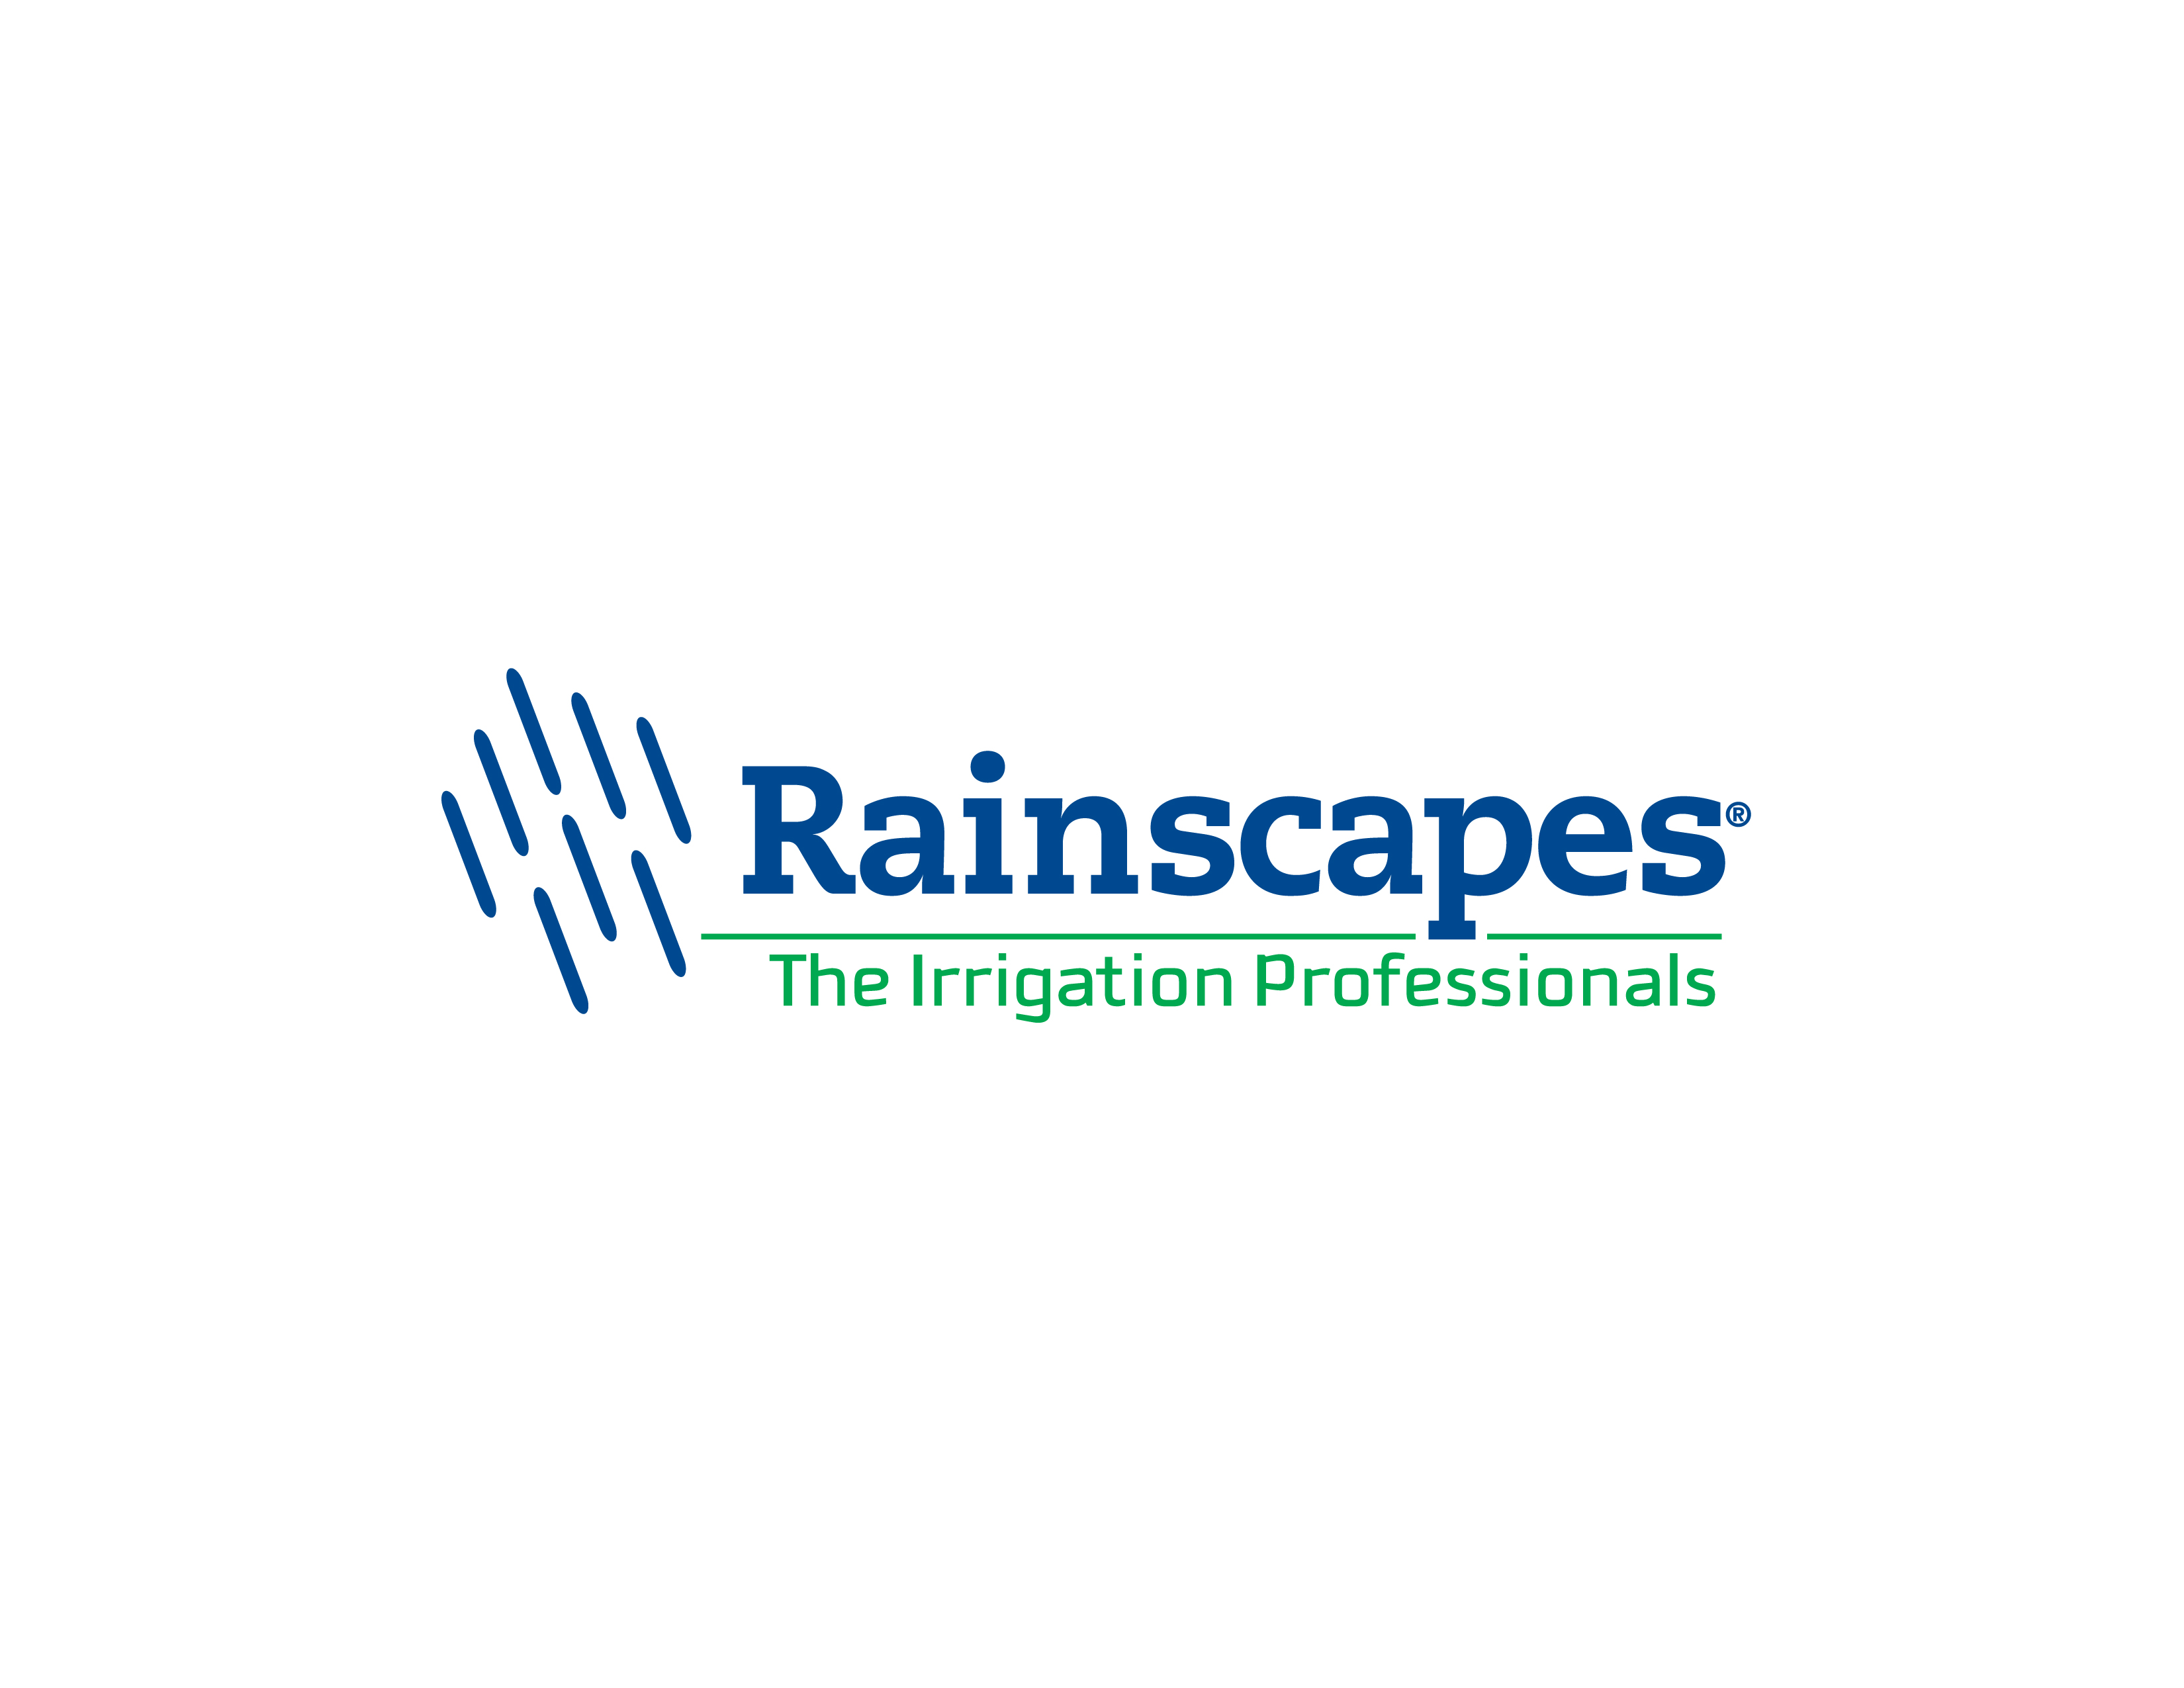 Rainscapes - The Irrigation Professionals